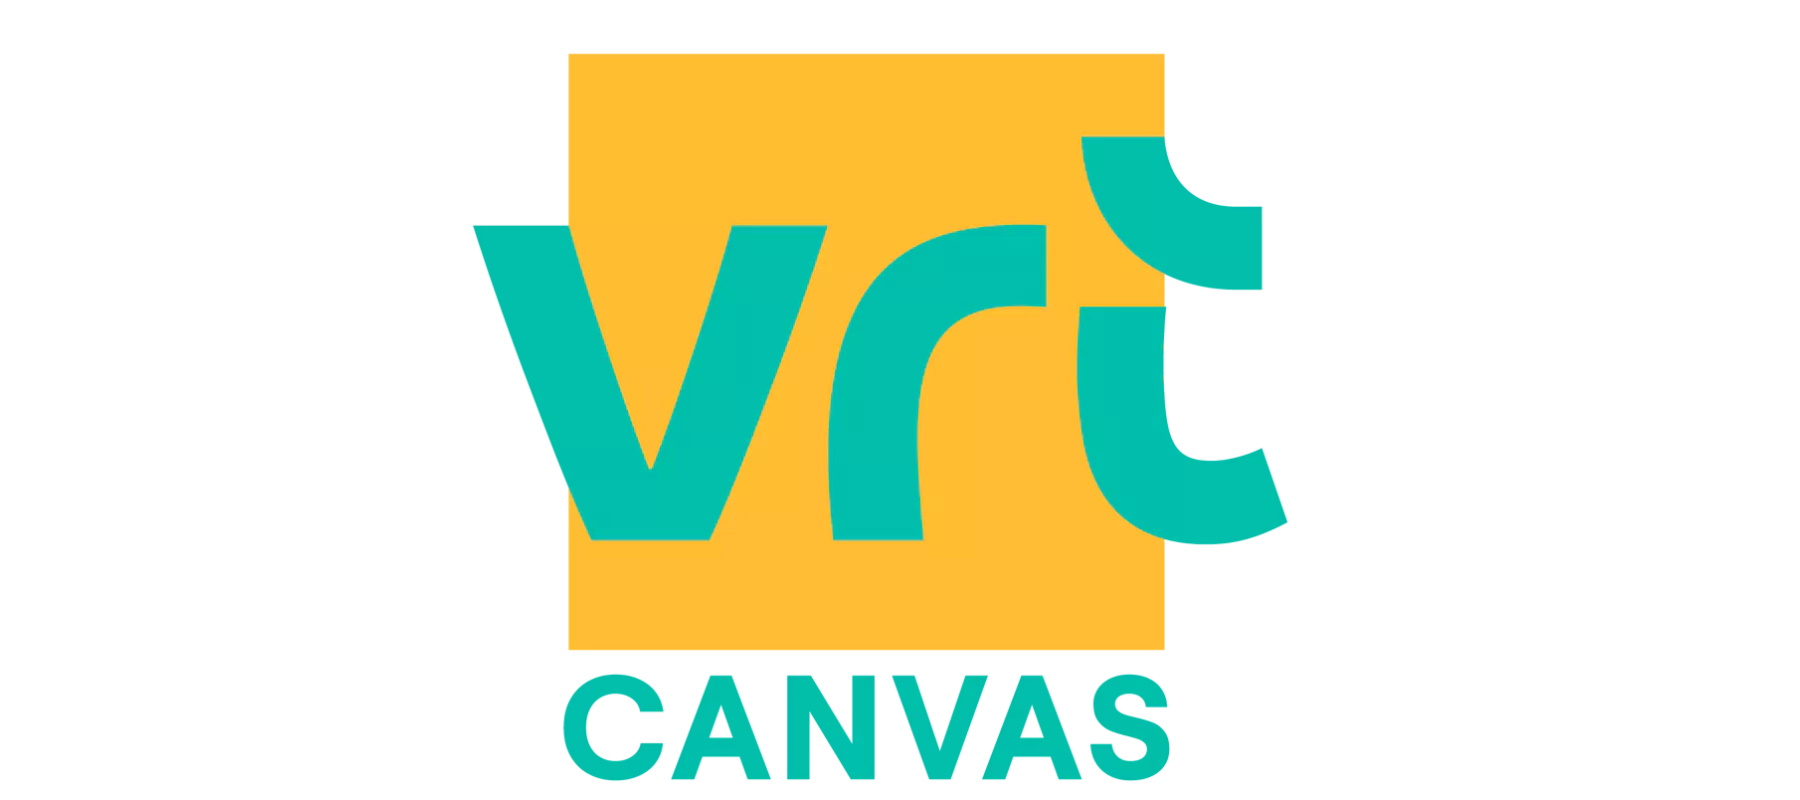 Canvas wordt per 4 september VRT Canvas